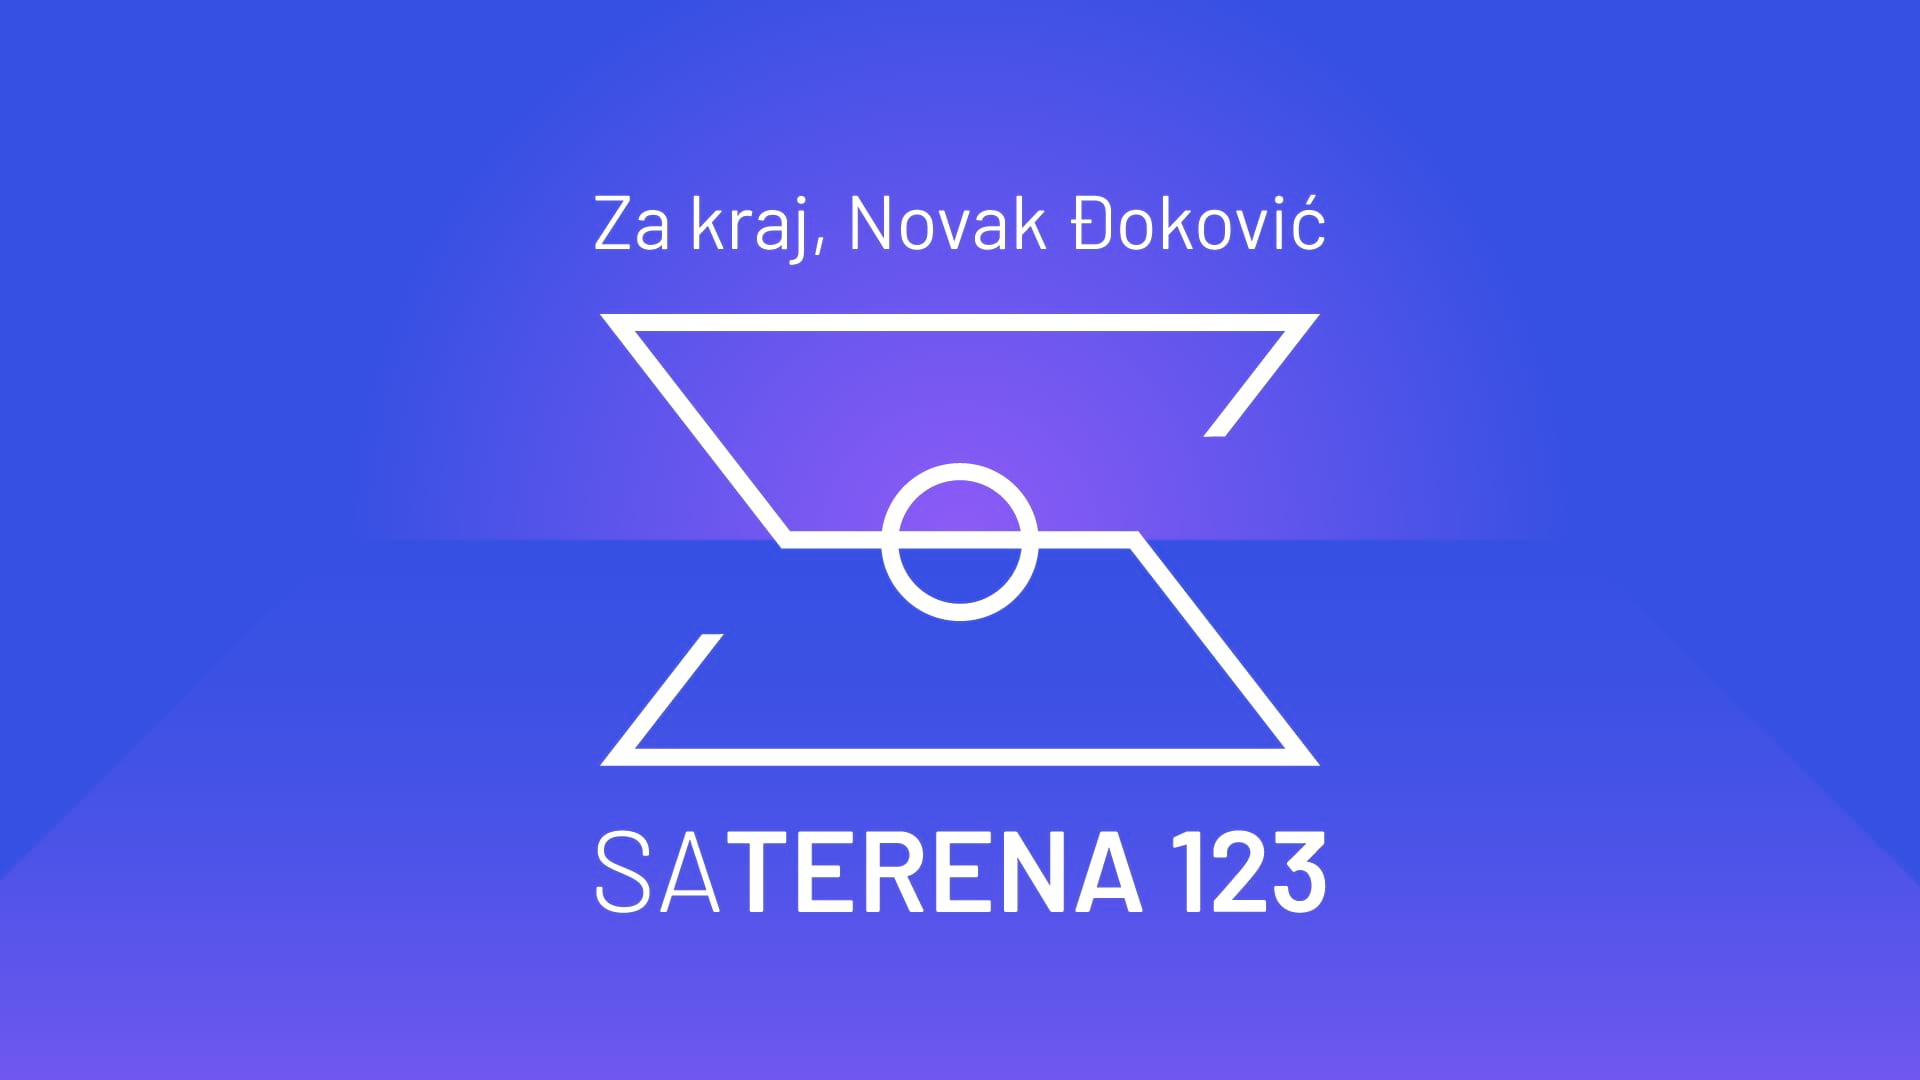 Sa terena 123: Za kraj, Novak Ðokoviæ